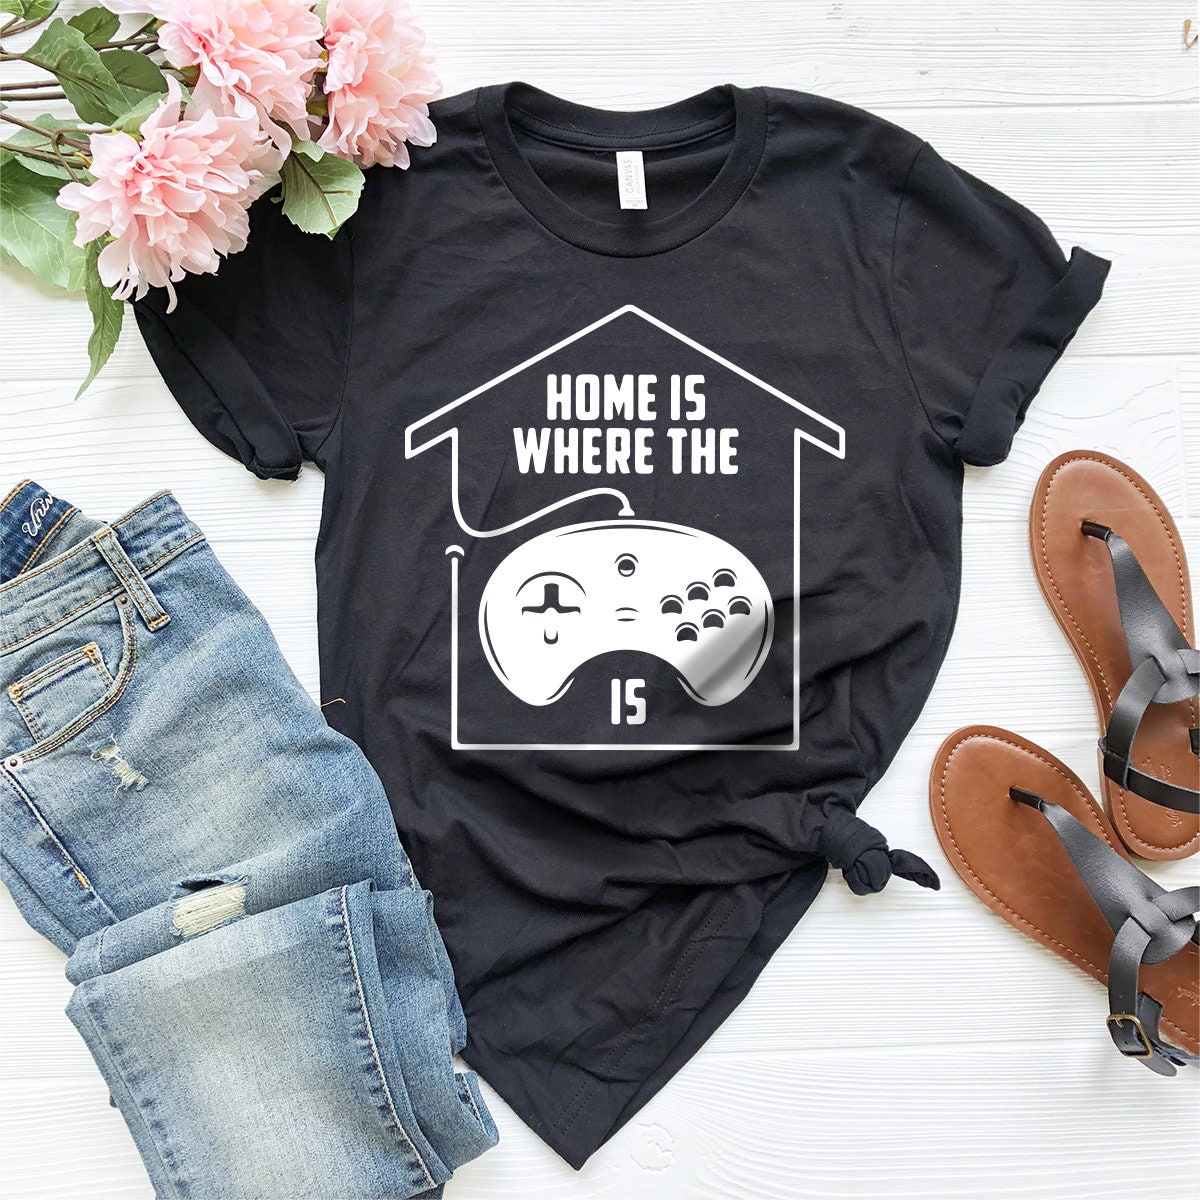 Funny Gamer Shirt, Funny Gaming Shirt, Game Controller Shirt, Shirt With Saying, Funny T-Shirt, Funny Shirt, Funny Saying Shirt, Gamer Tee - Fastdeliverytees.com